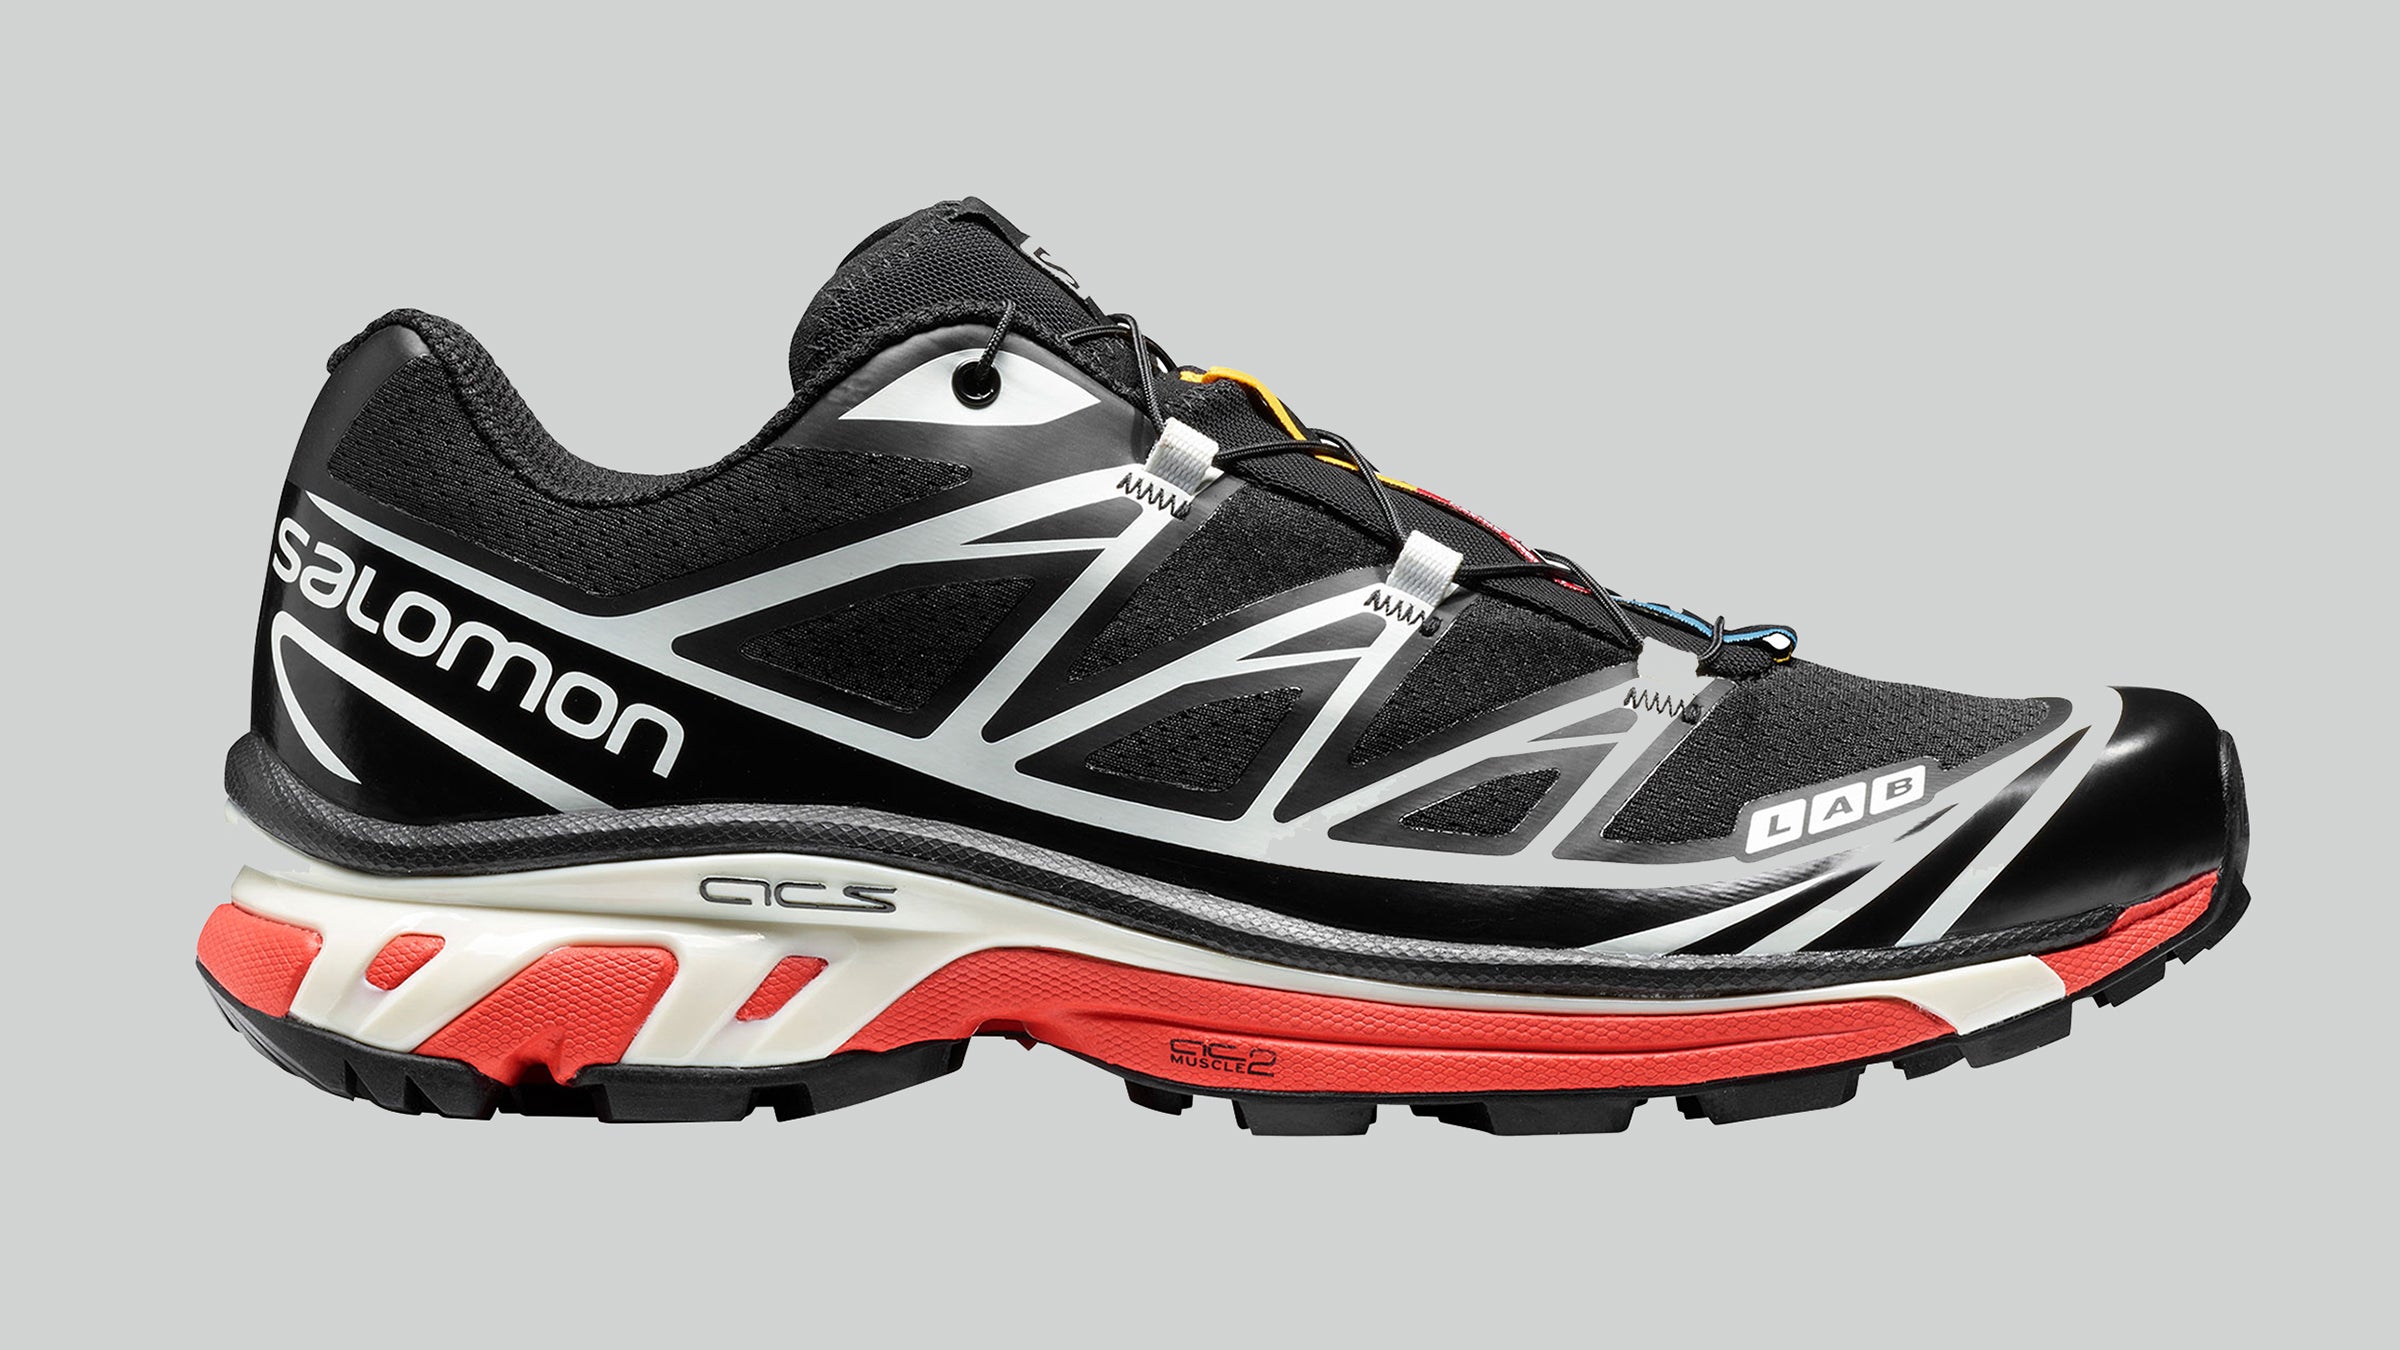 Salomon Shoes and Boots | Salomon Walking Boots - Nevisport